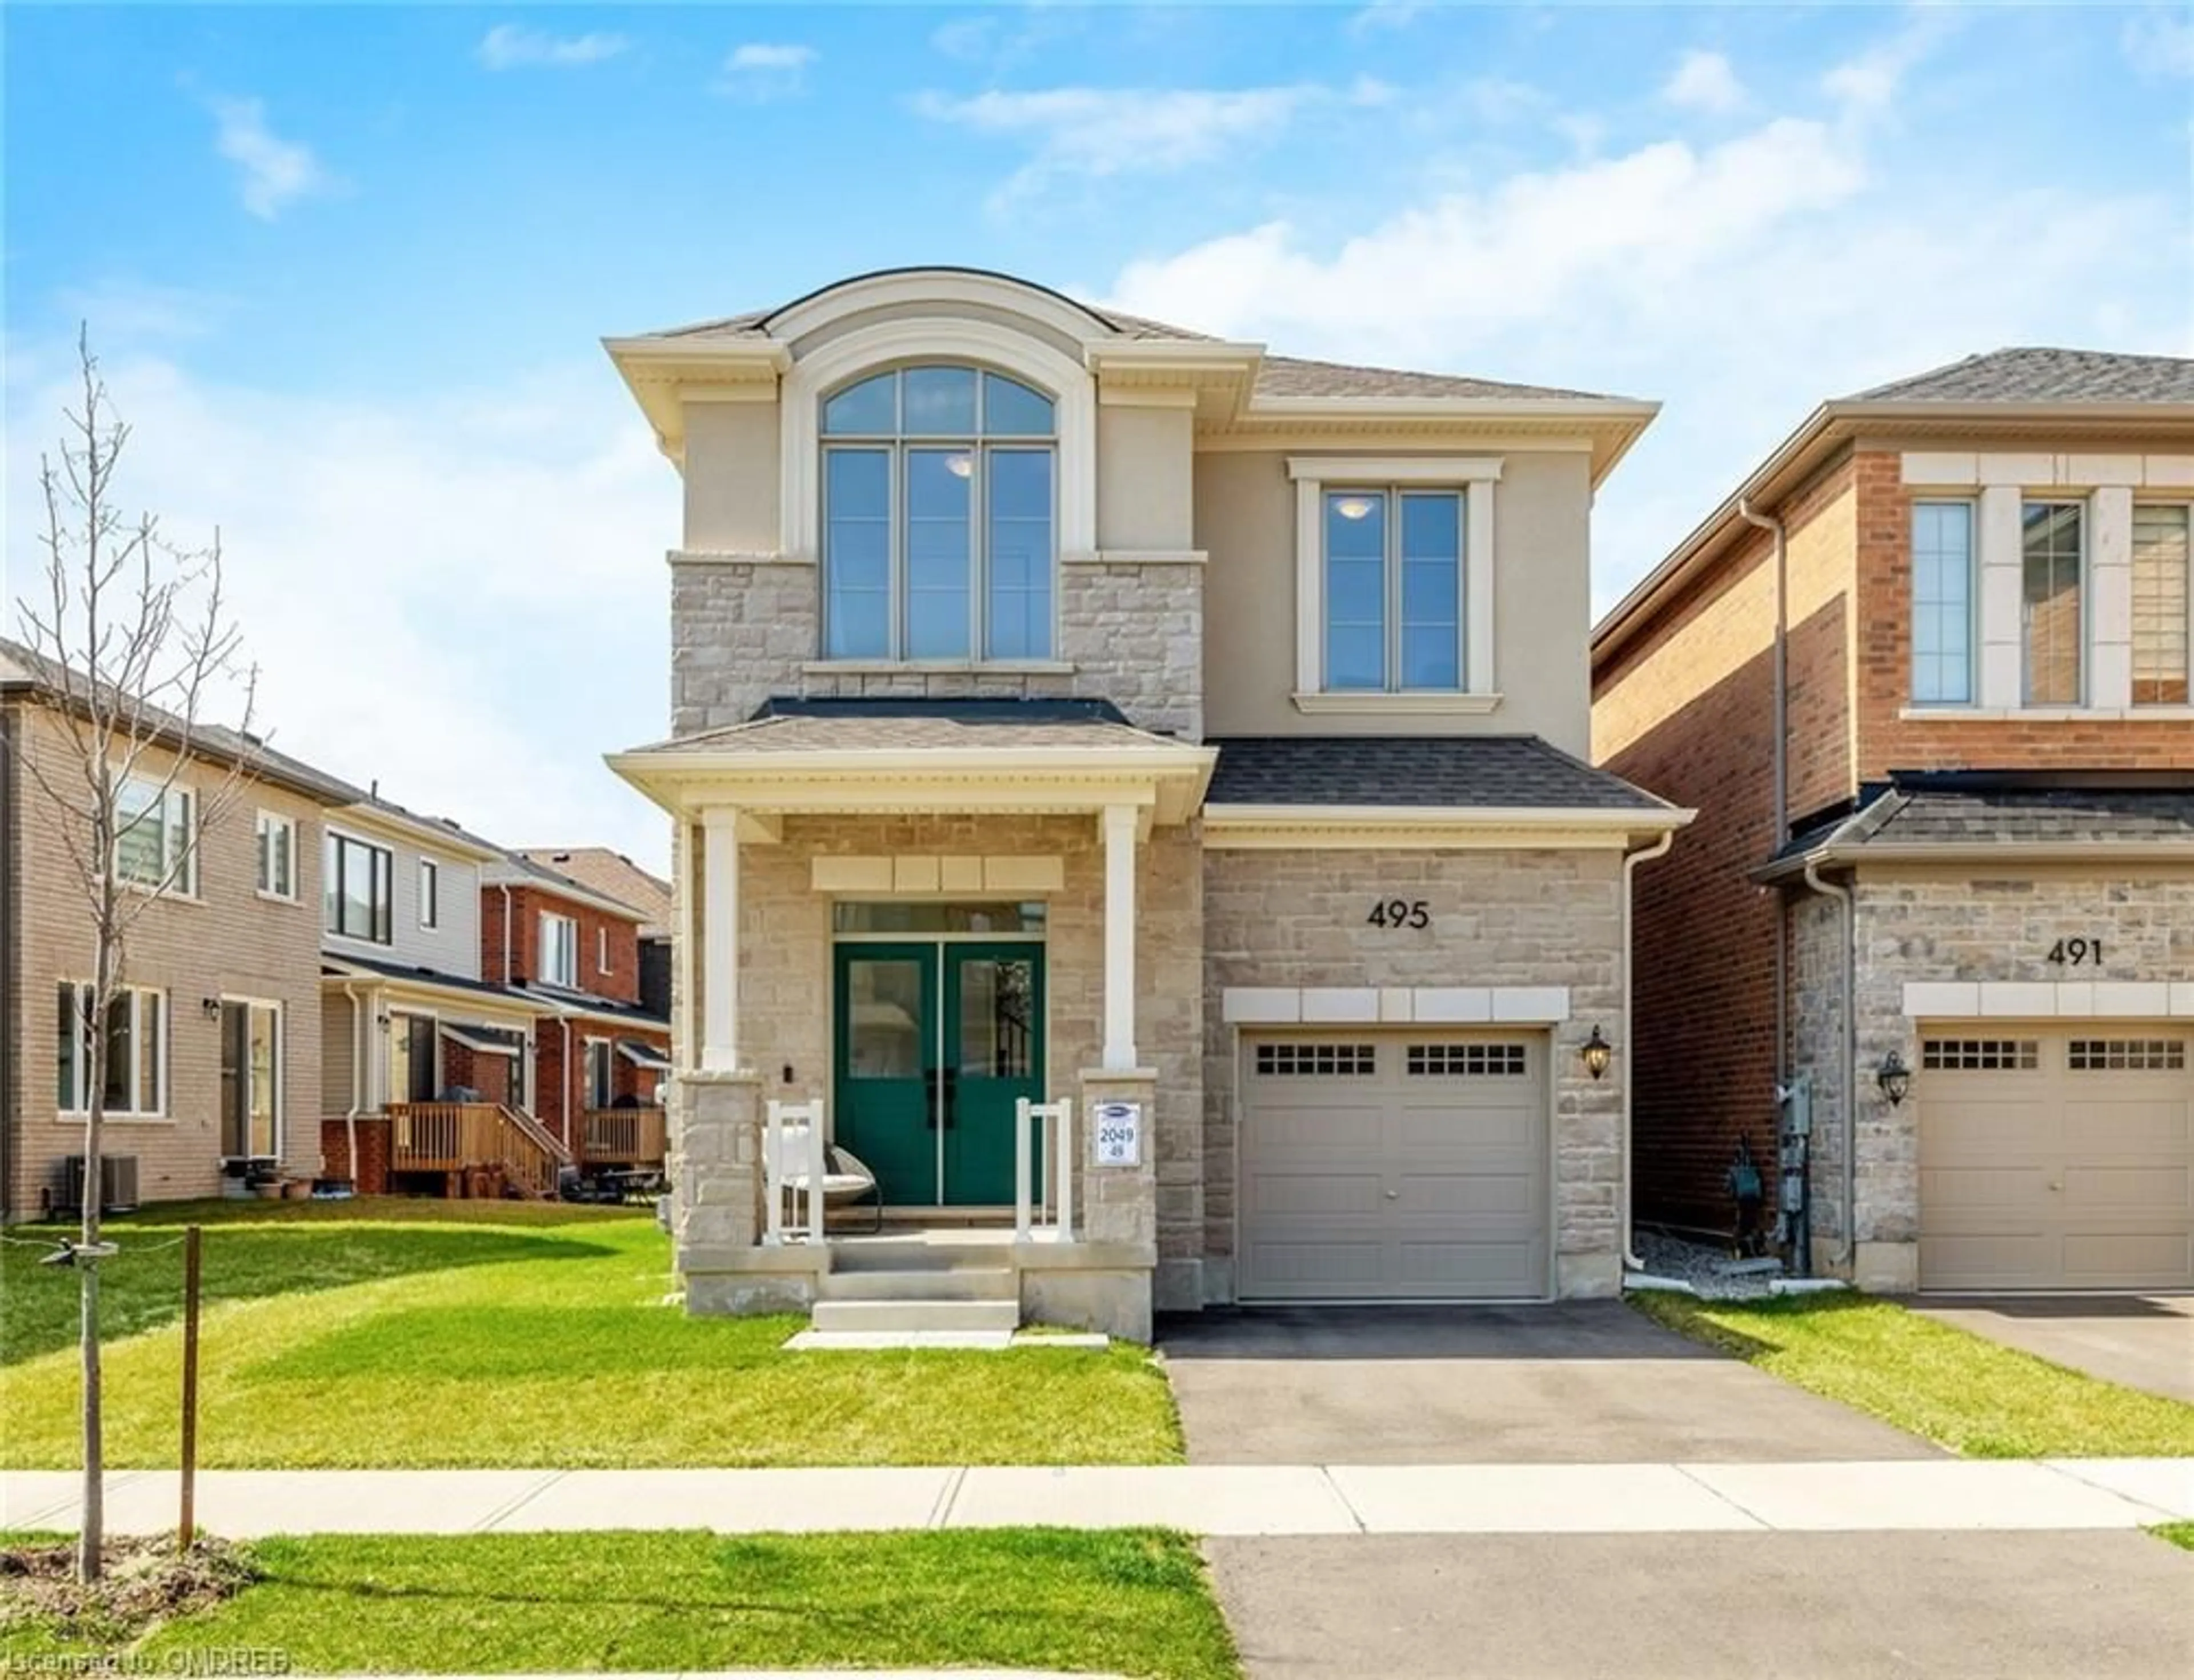 Home with brick exterior material for 495 Violet Gate, Milton Ontario L9E 1X6